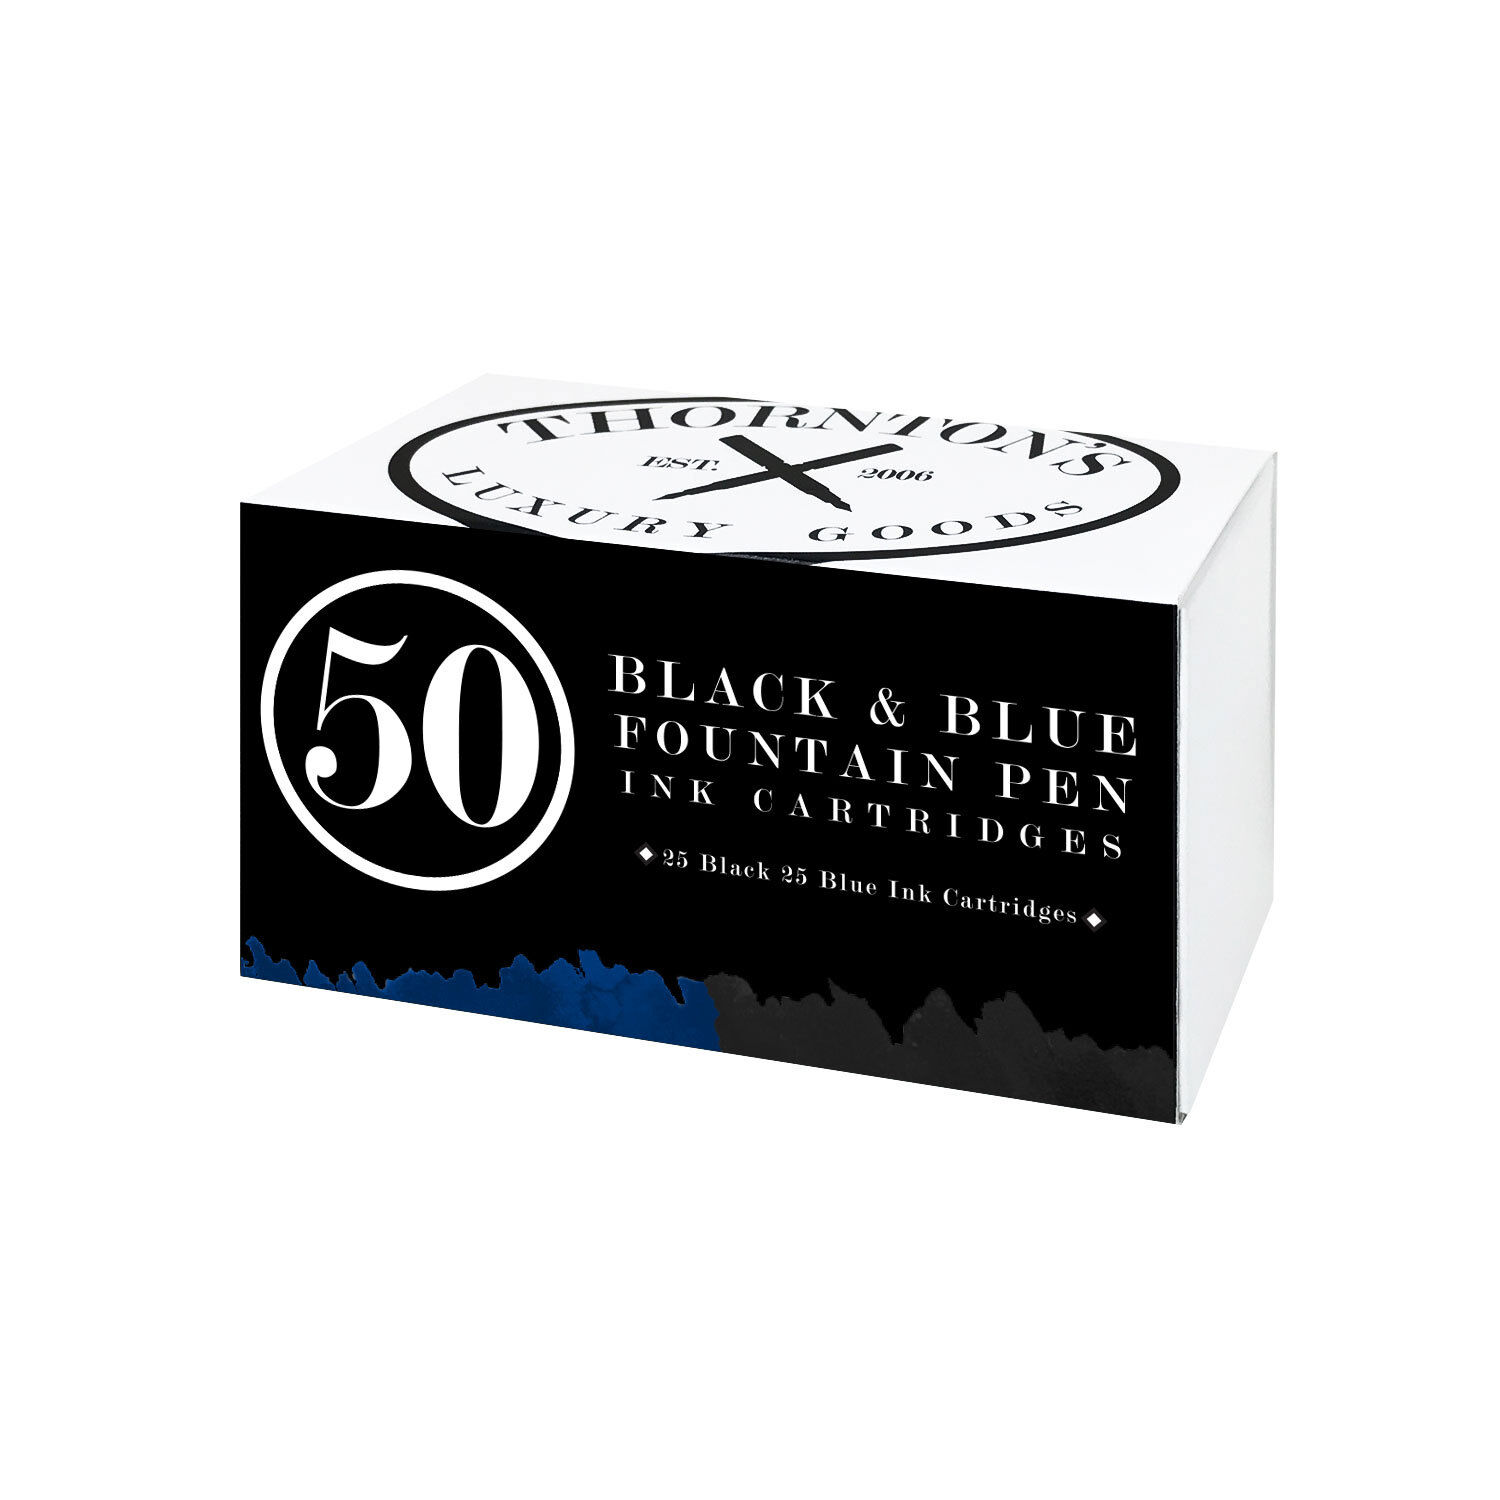 Thornton's Standard Fountain Pen Ink Cartridges, Black & Blue Ink, Pack of 50